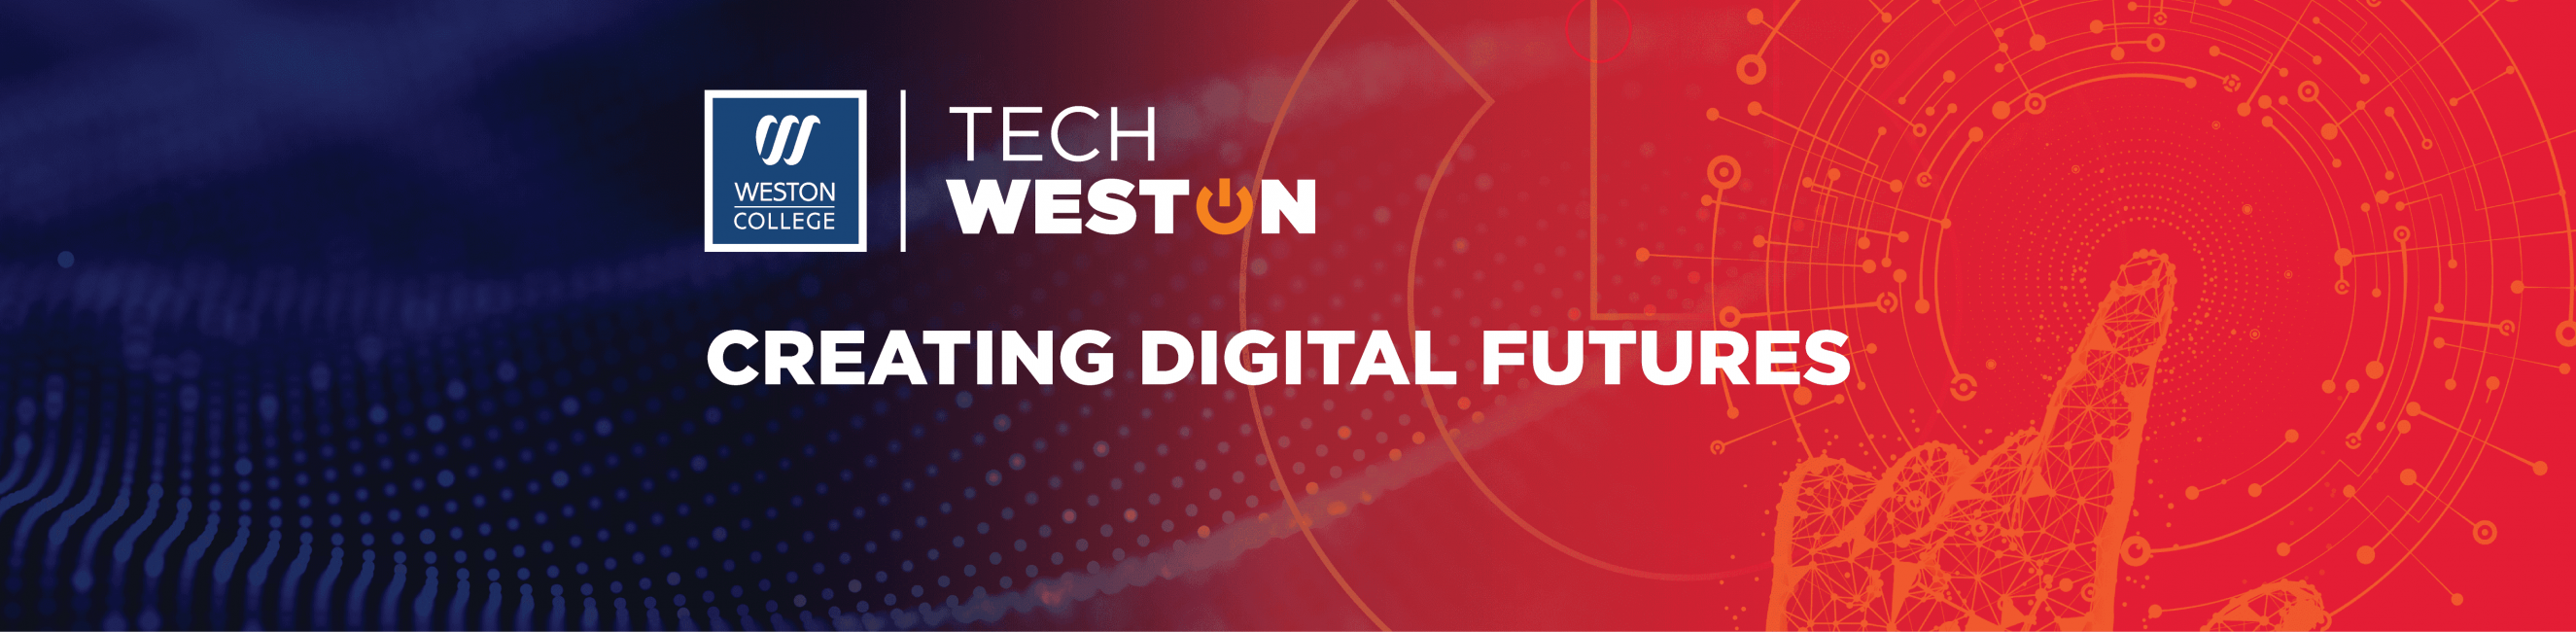 Tech Weston - Creating Digital Futures for SME, Digital courses, training